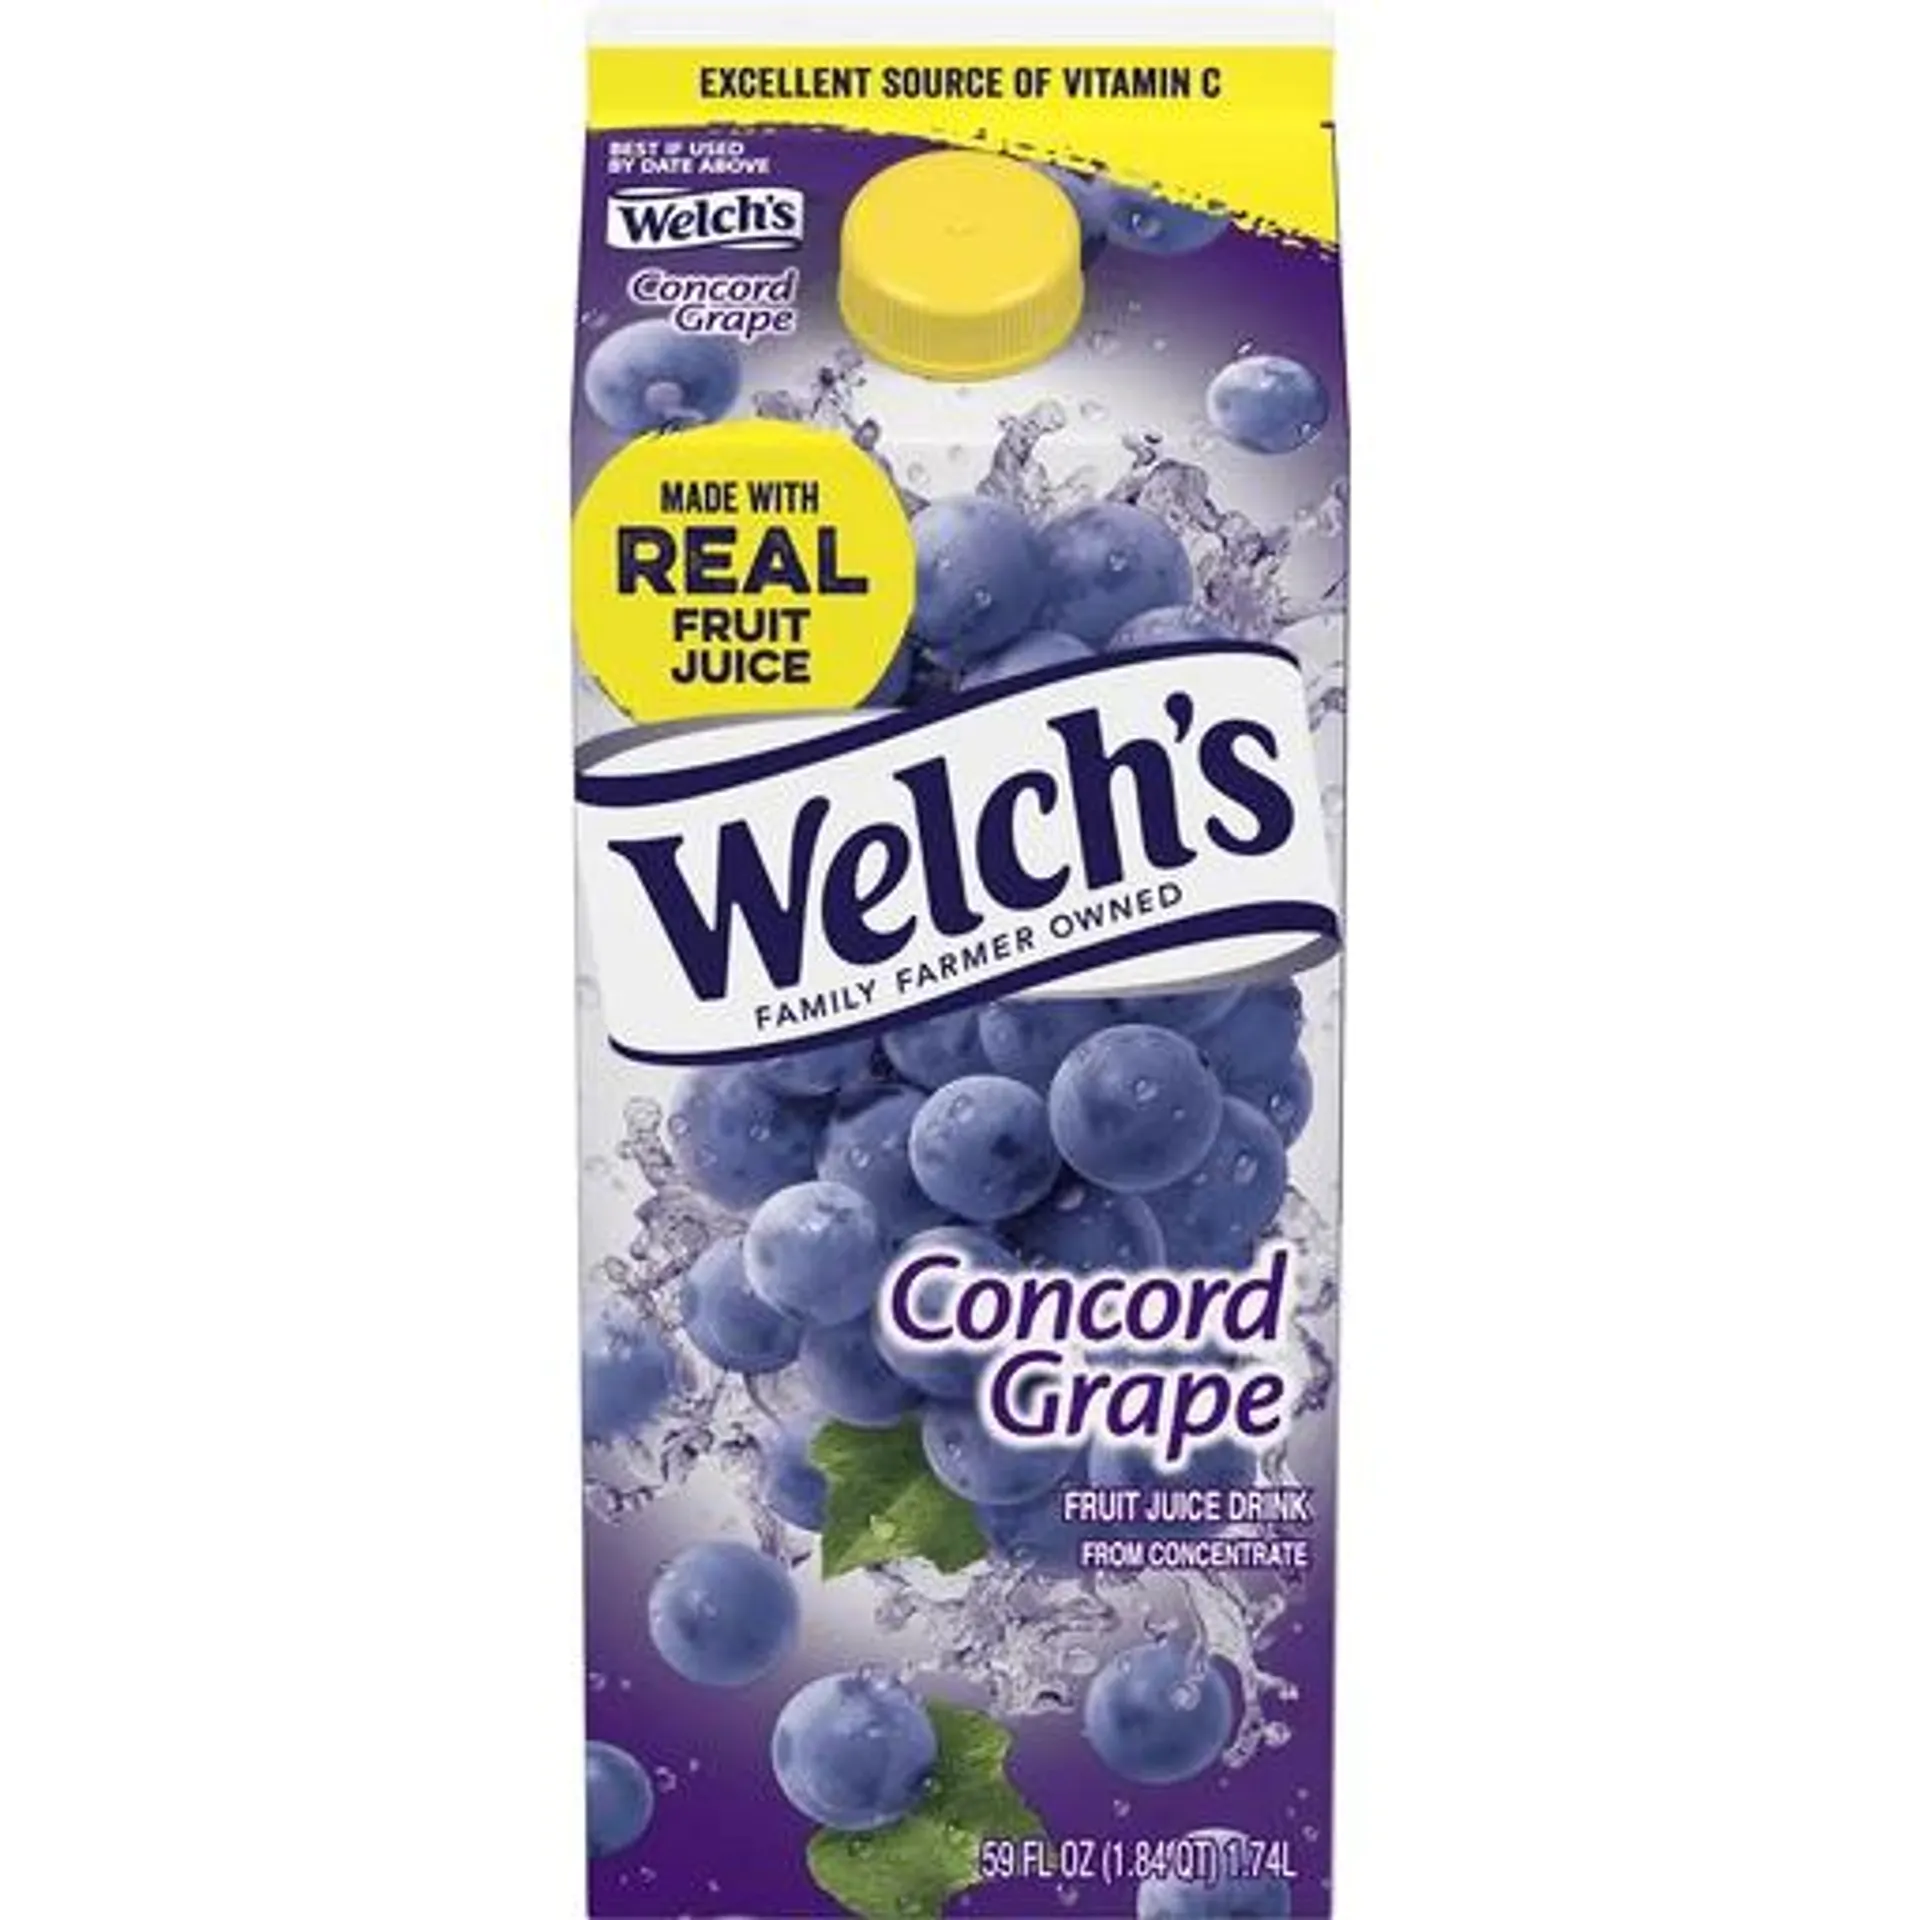 Welch's Concord Grape Fruit Juice Drink, 59 Fl Oz carton